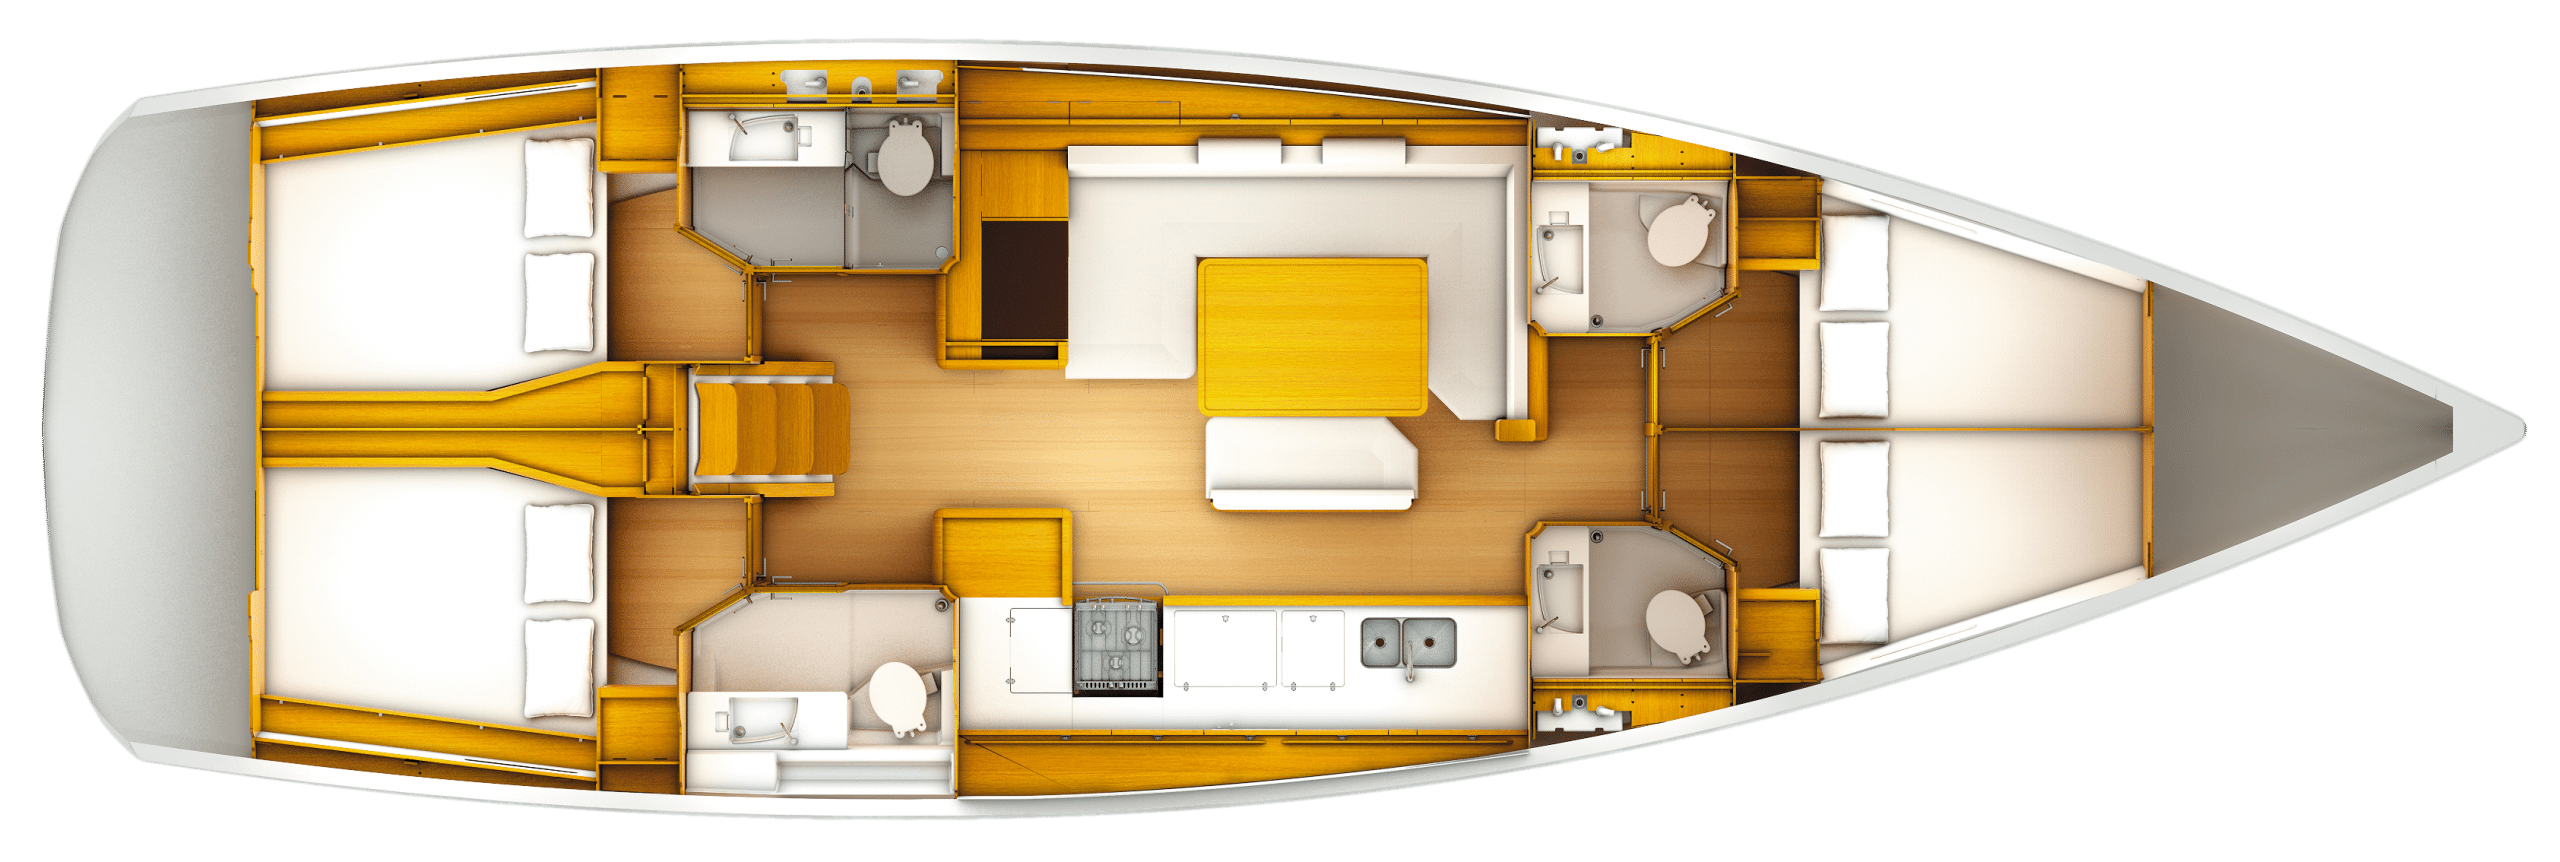 jeanneau-sun-odyssey-519-layout-4-cabins-4-heads